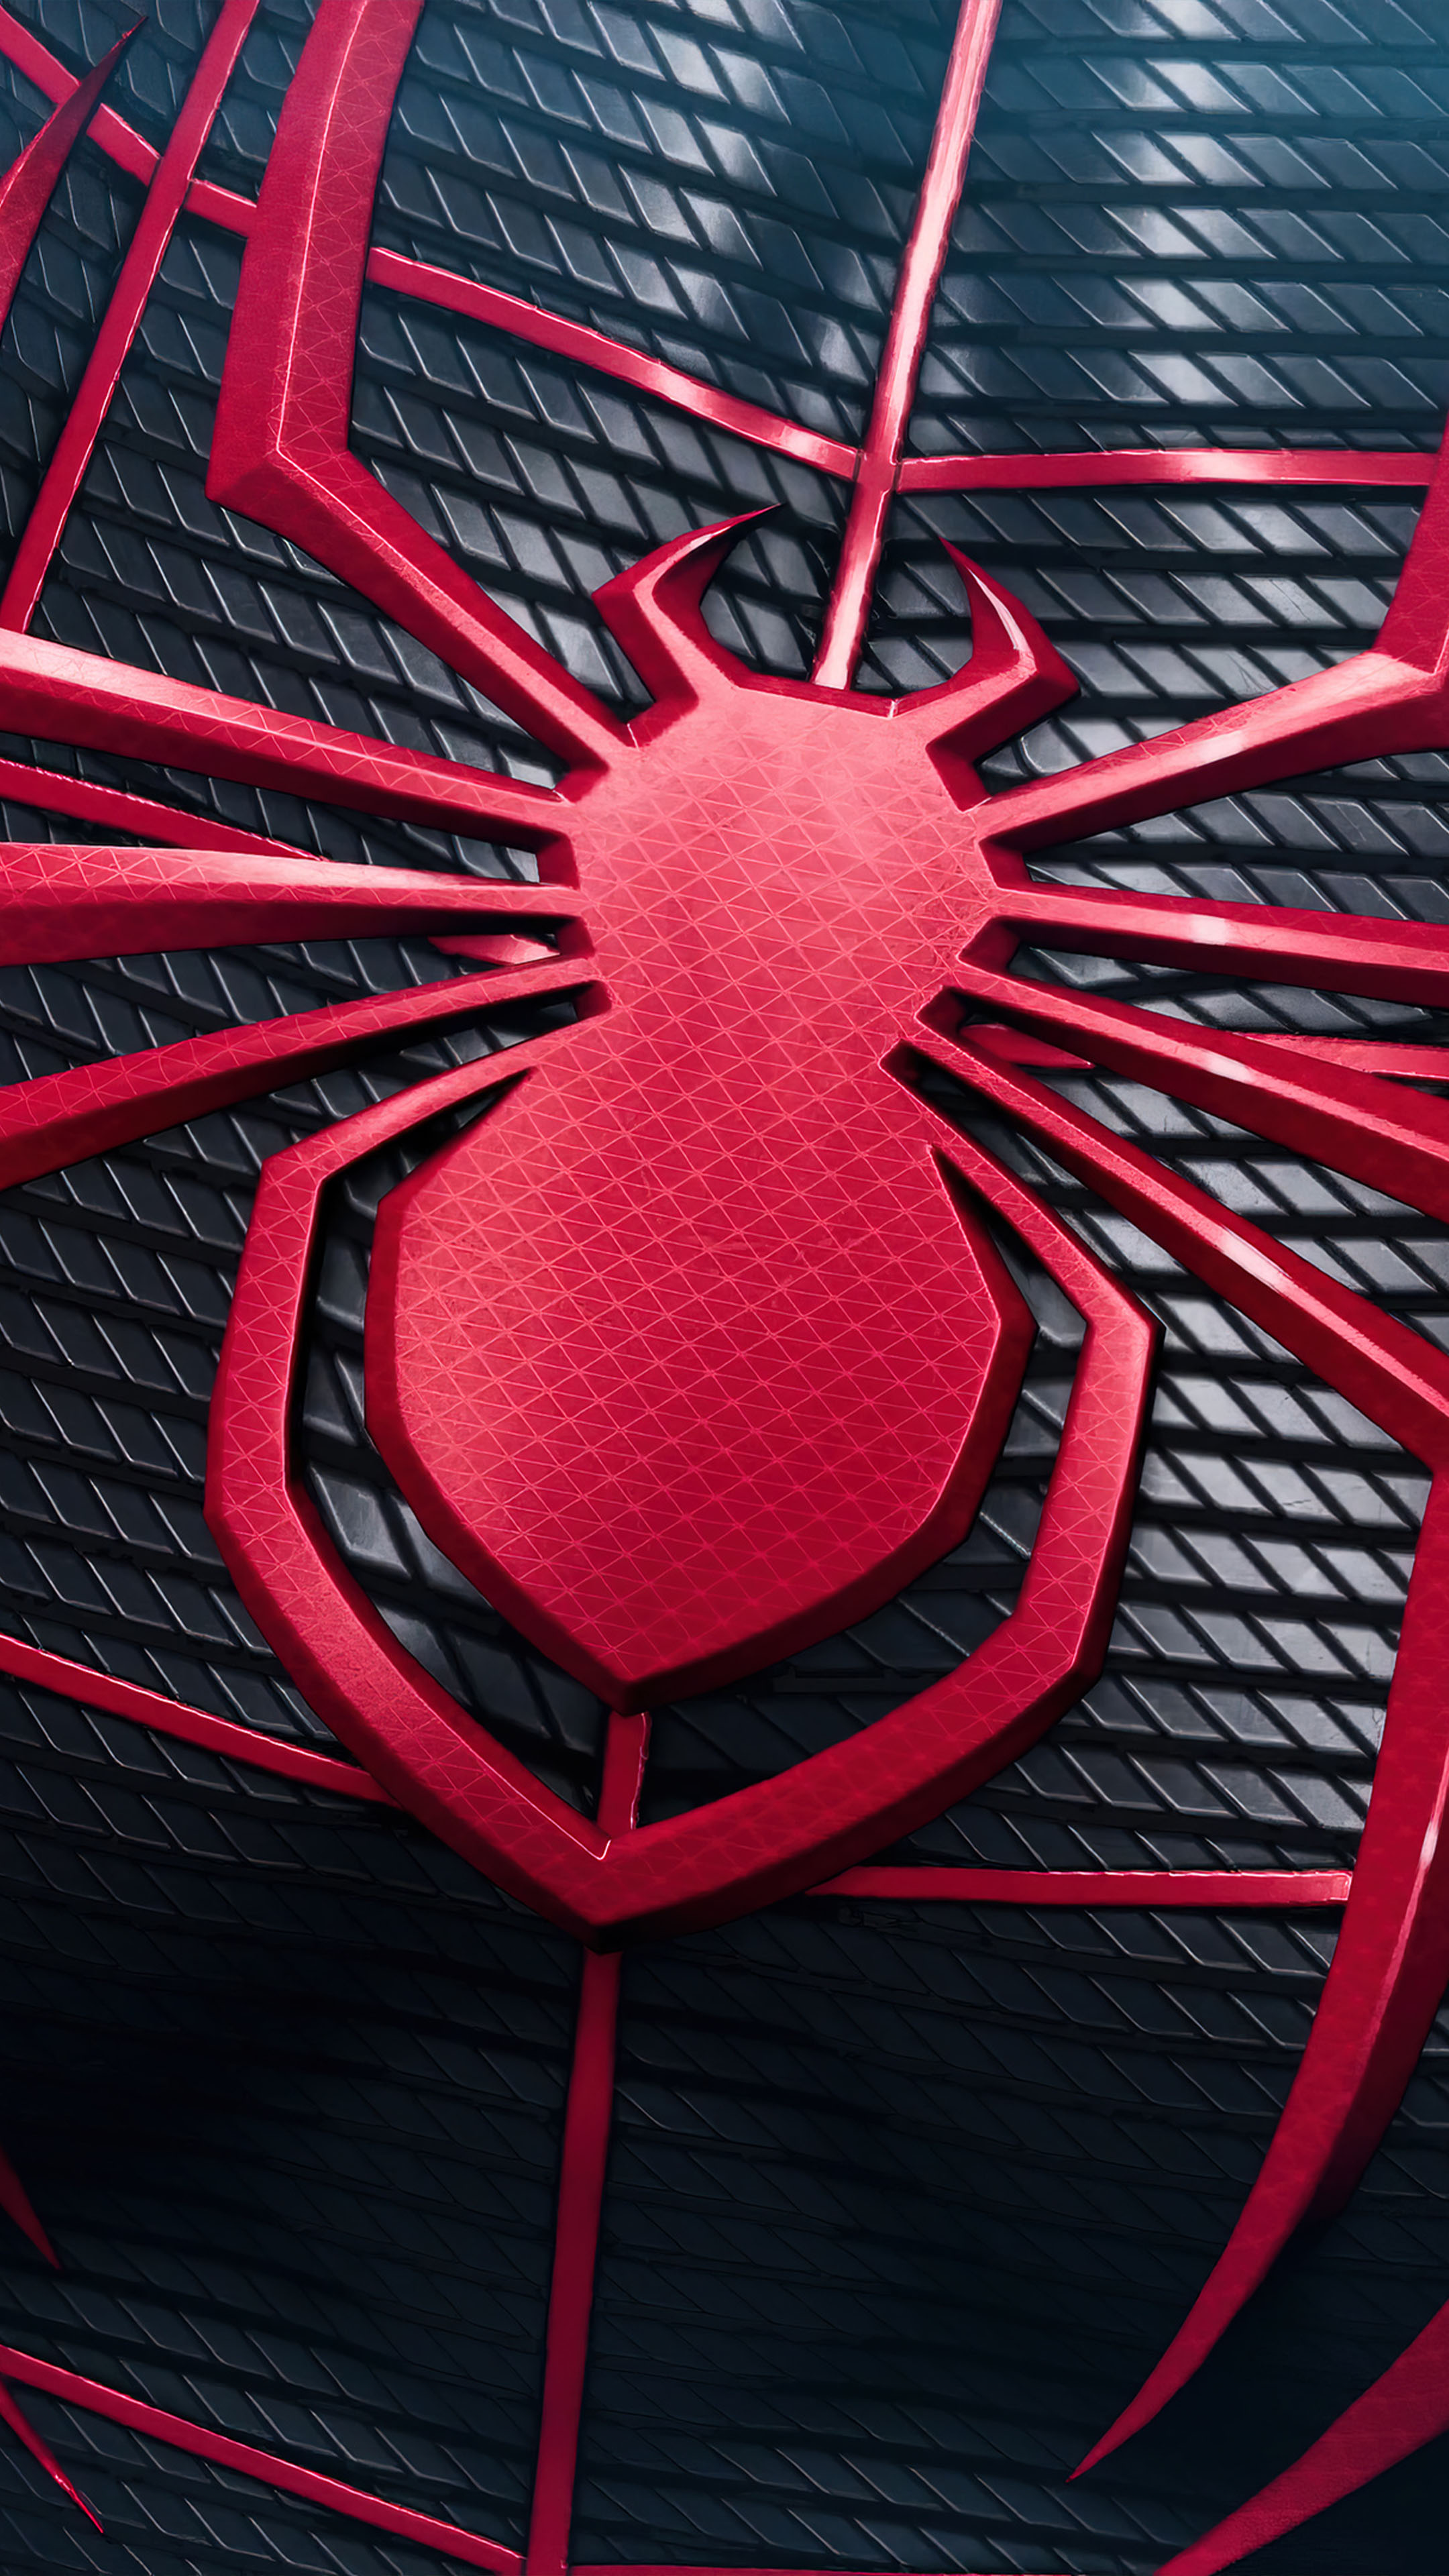 Spider On Spider Man Suit 4K Ultra HD Mobile Wallpaper